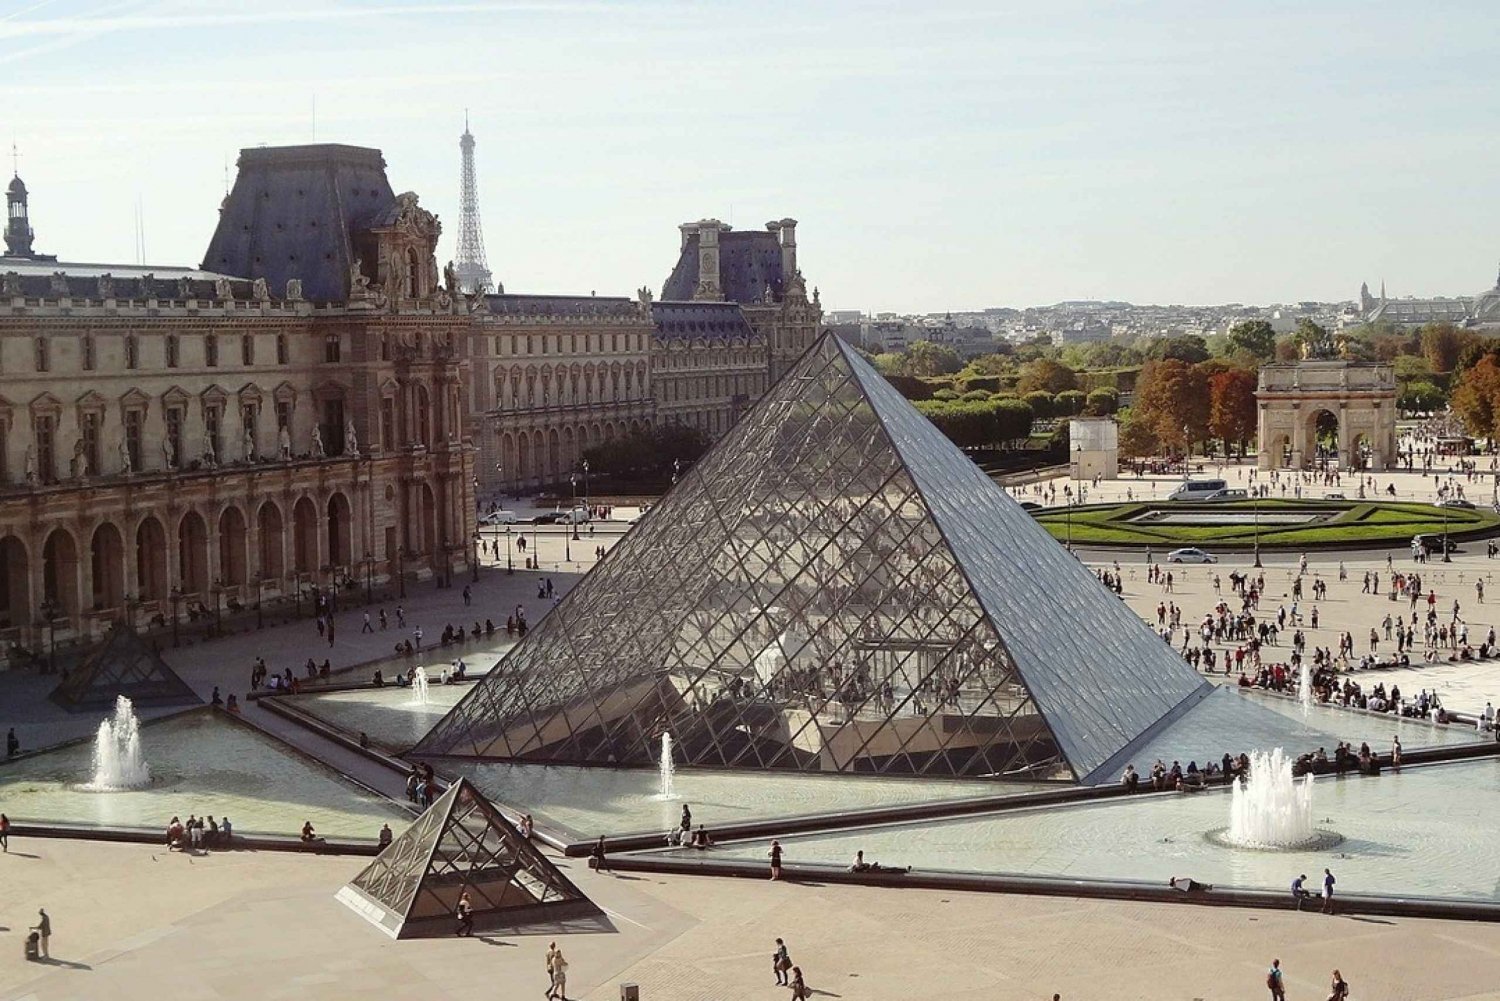 Paris: Tuileries Garden Walking Tour & Louvre Entry Ticket